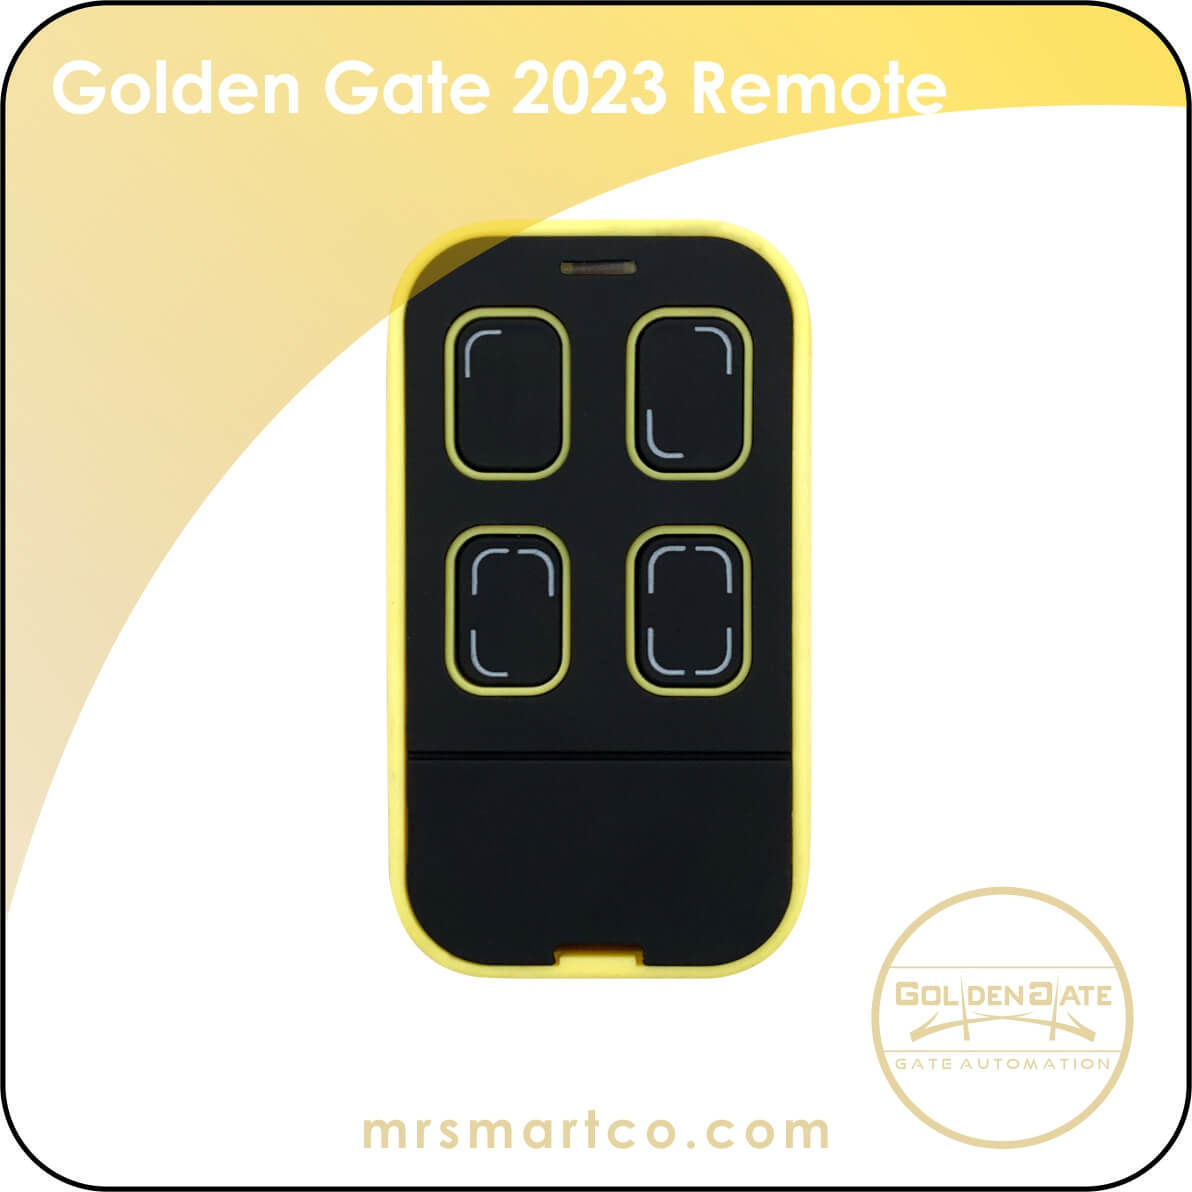 Golden Gate 2023 Remote